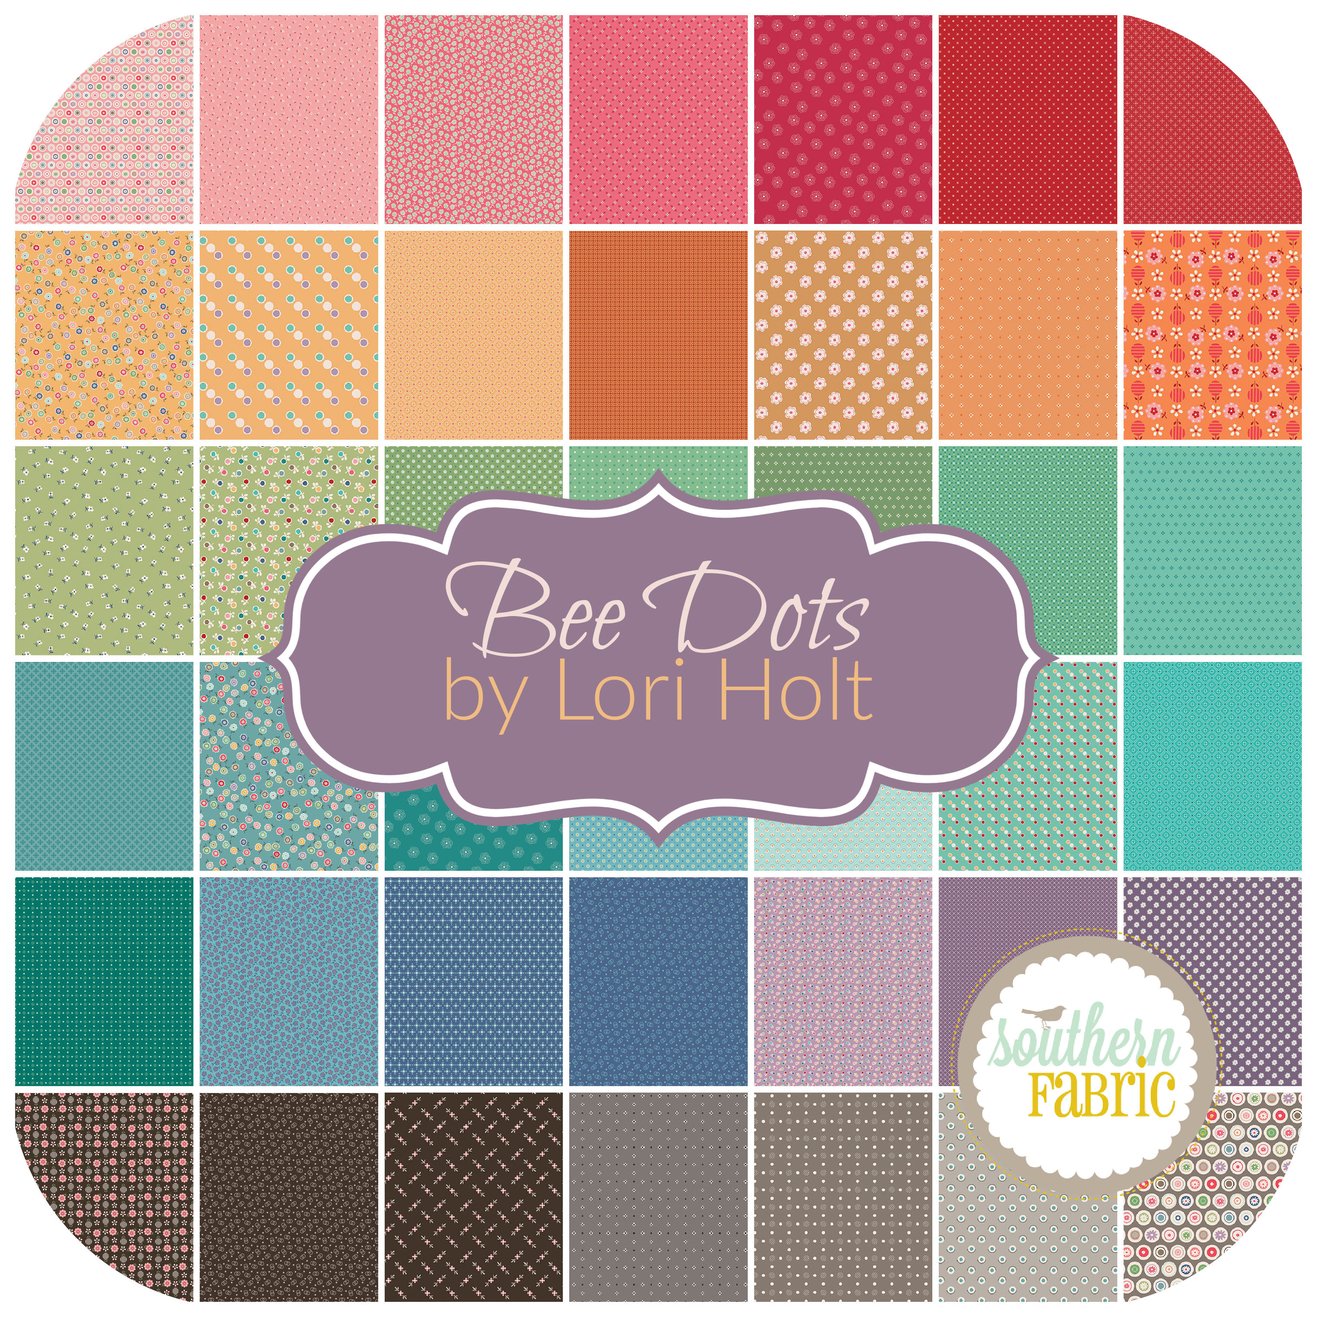 Bee Dots Fat Quarter Bundle (50 pcs) by Lori Holt for Riley Blake (FQ-14160-50)